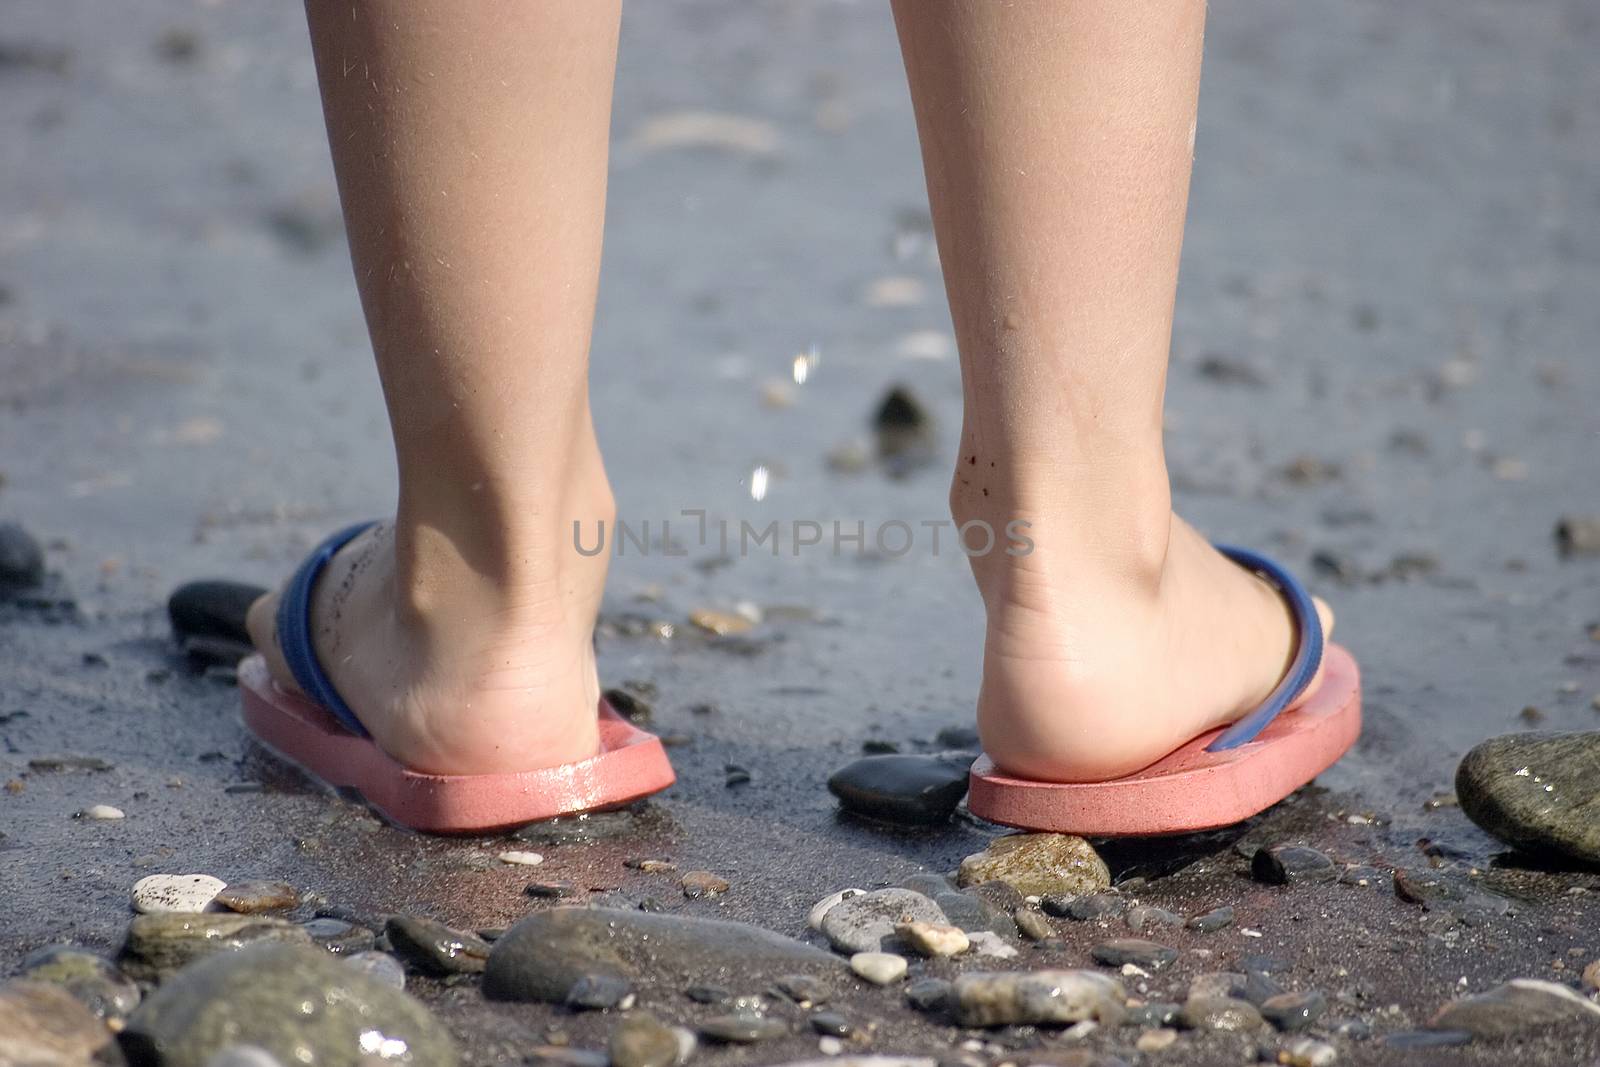 Childish legs on the beach by miradrozdowski